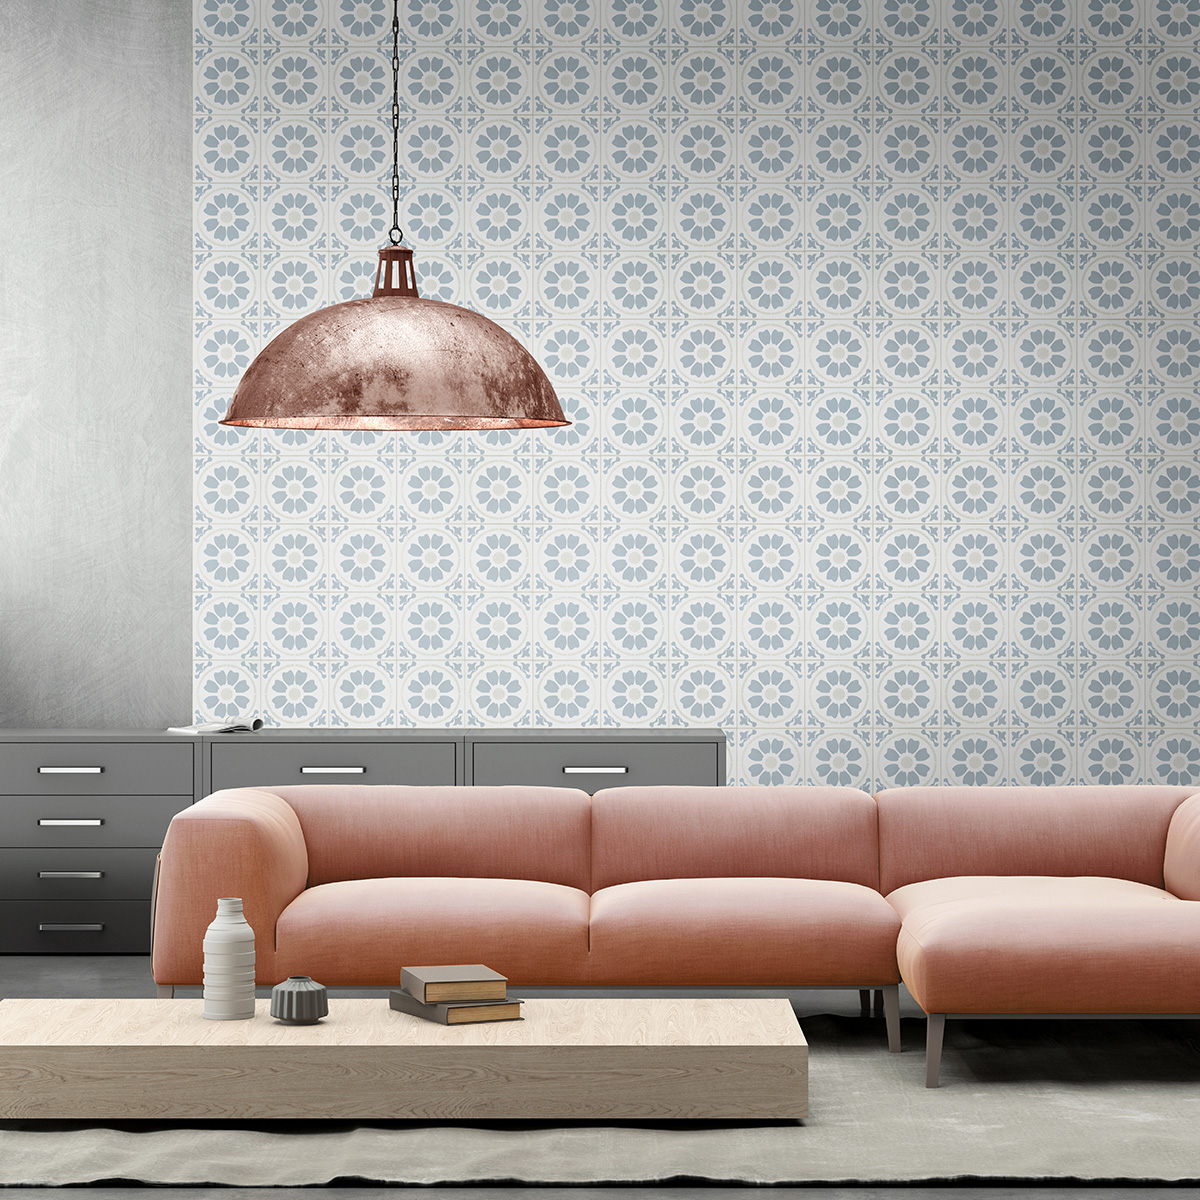 Tamensa Encaustic Tile livingroom wall tile Room Scene